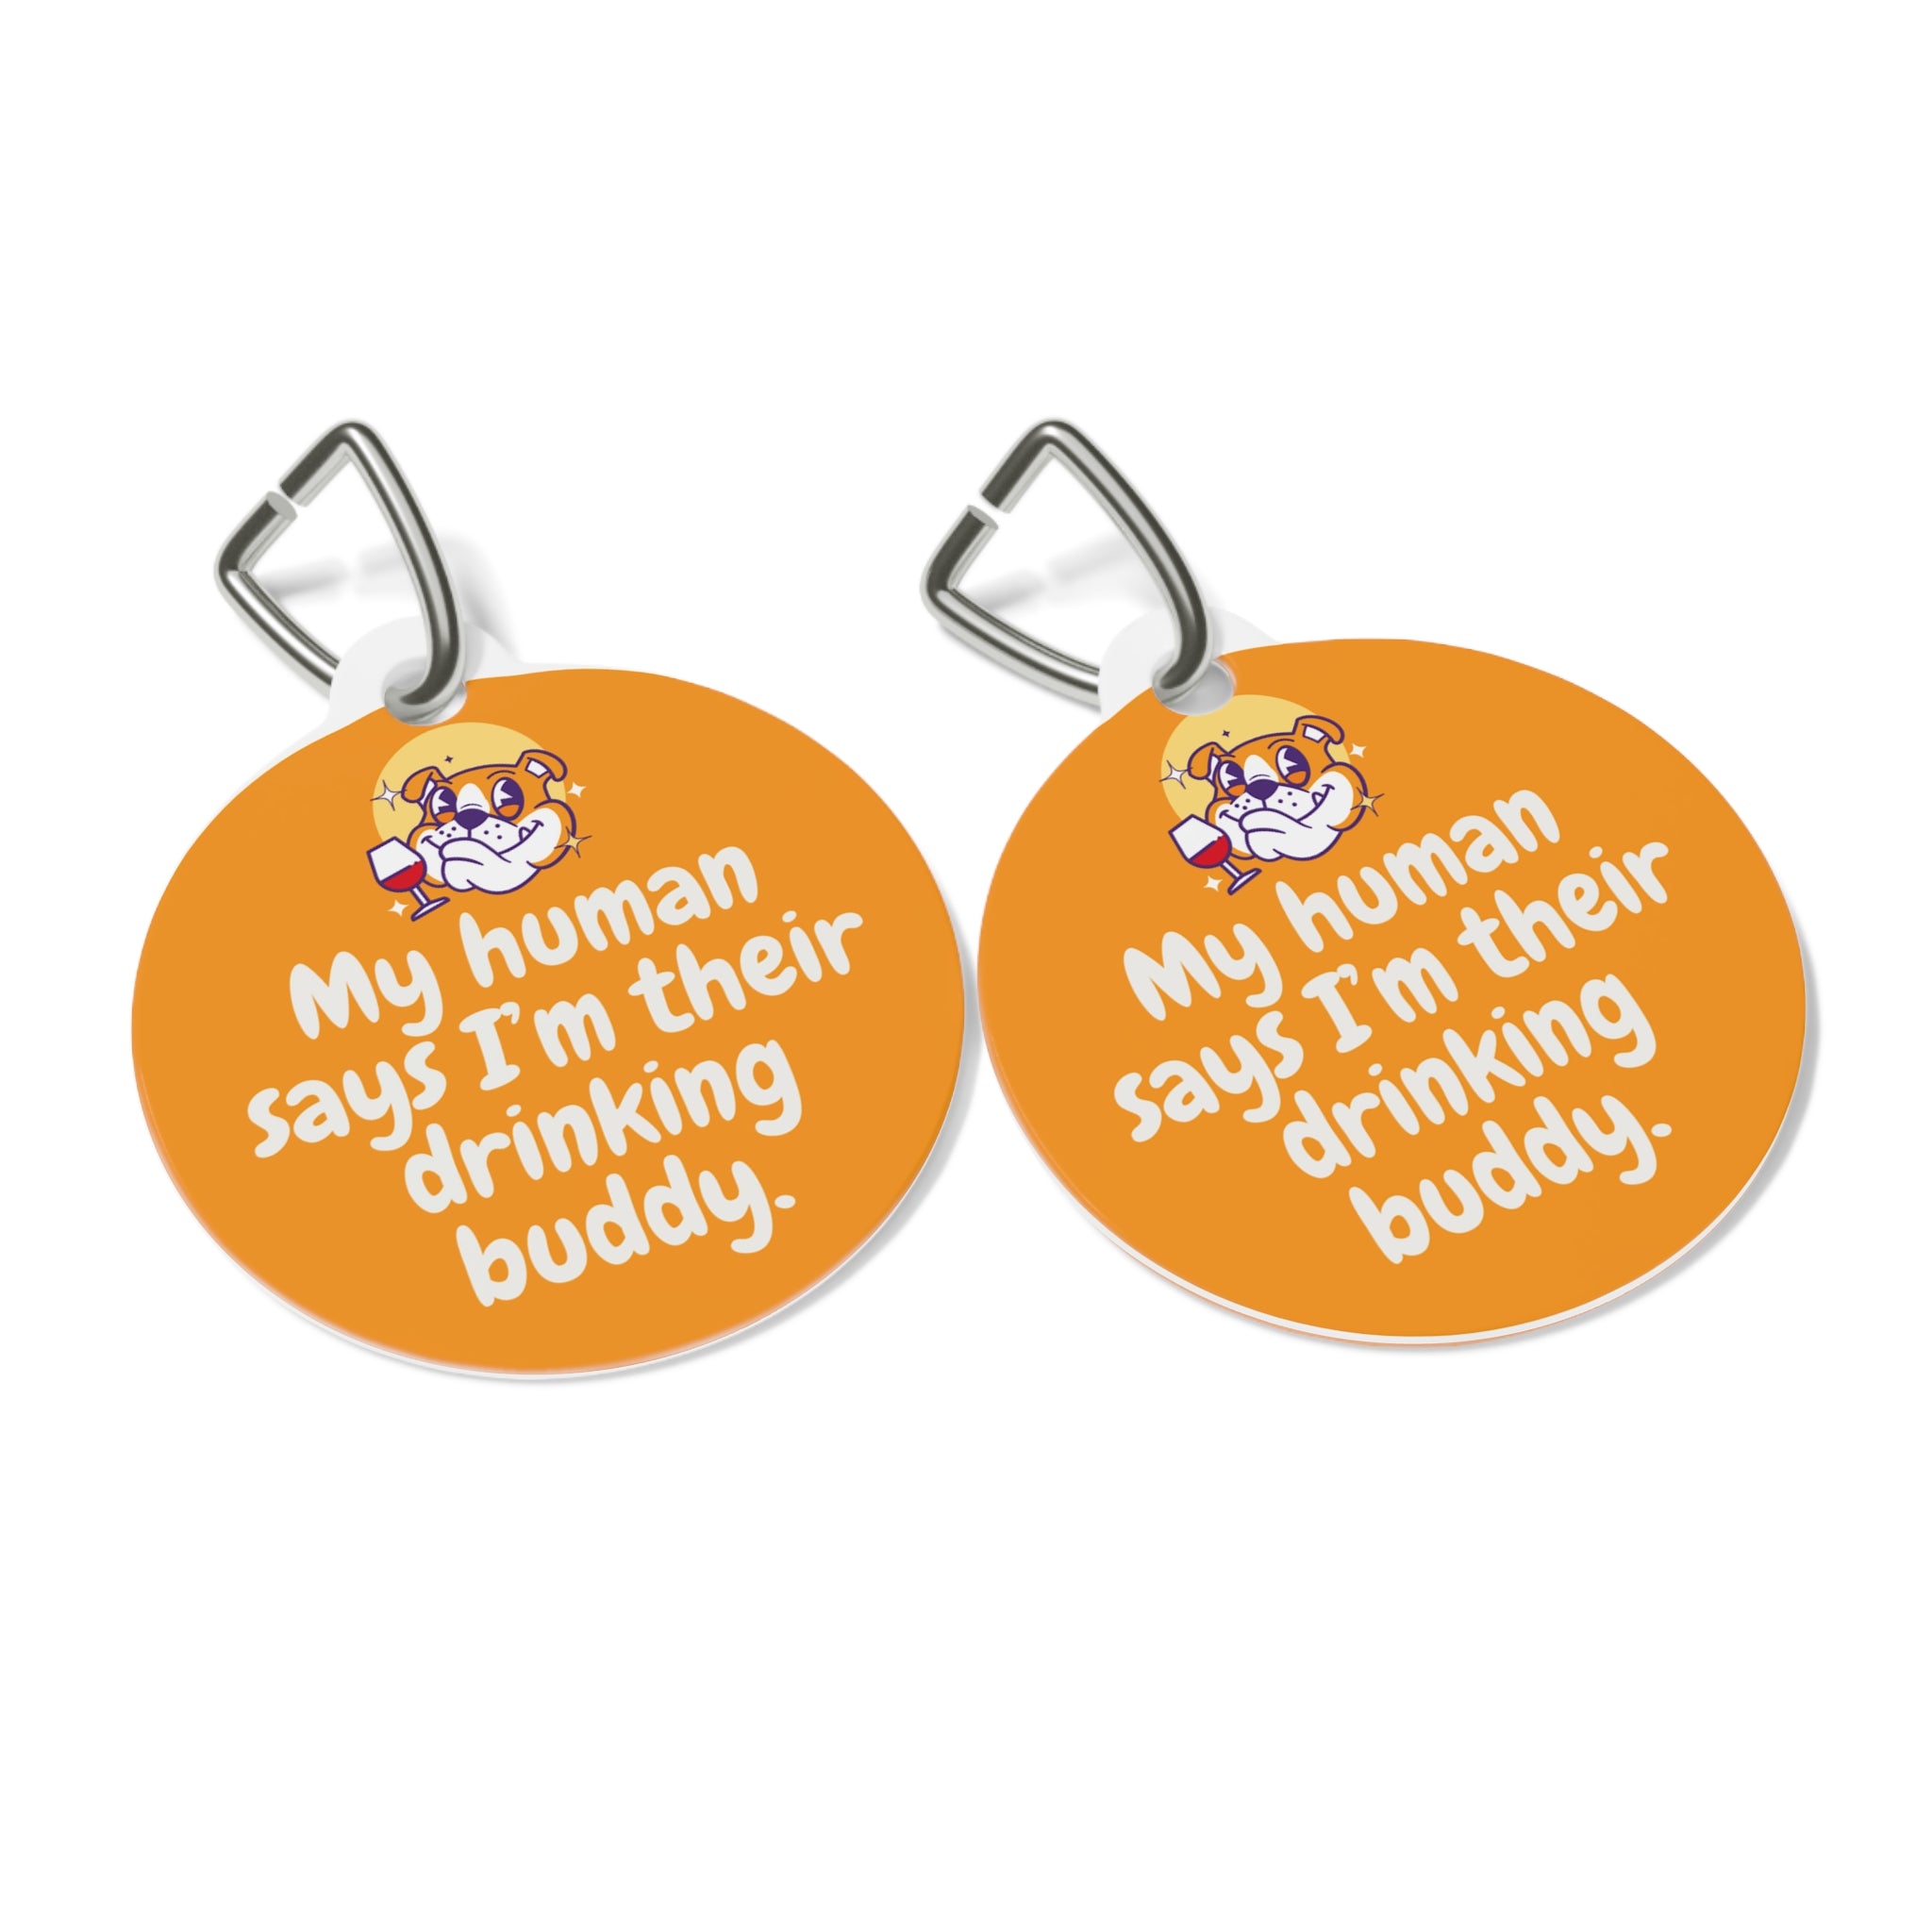 Tipsy Bully Dog Tags: "My Human Says I'm Their Drinking Buddy" Edition - Orange